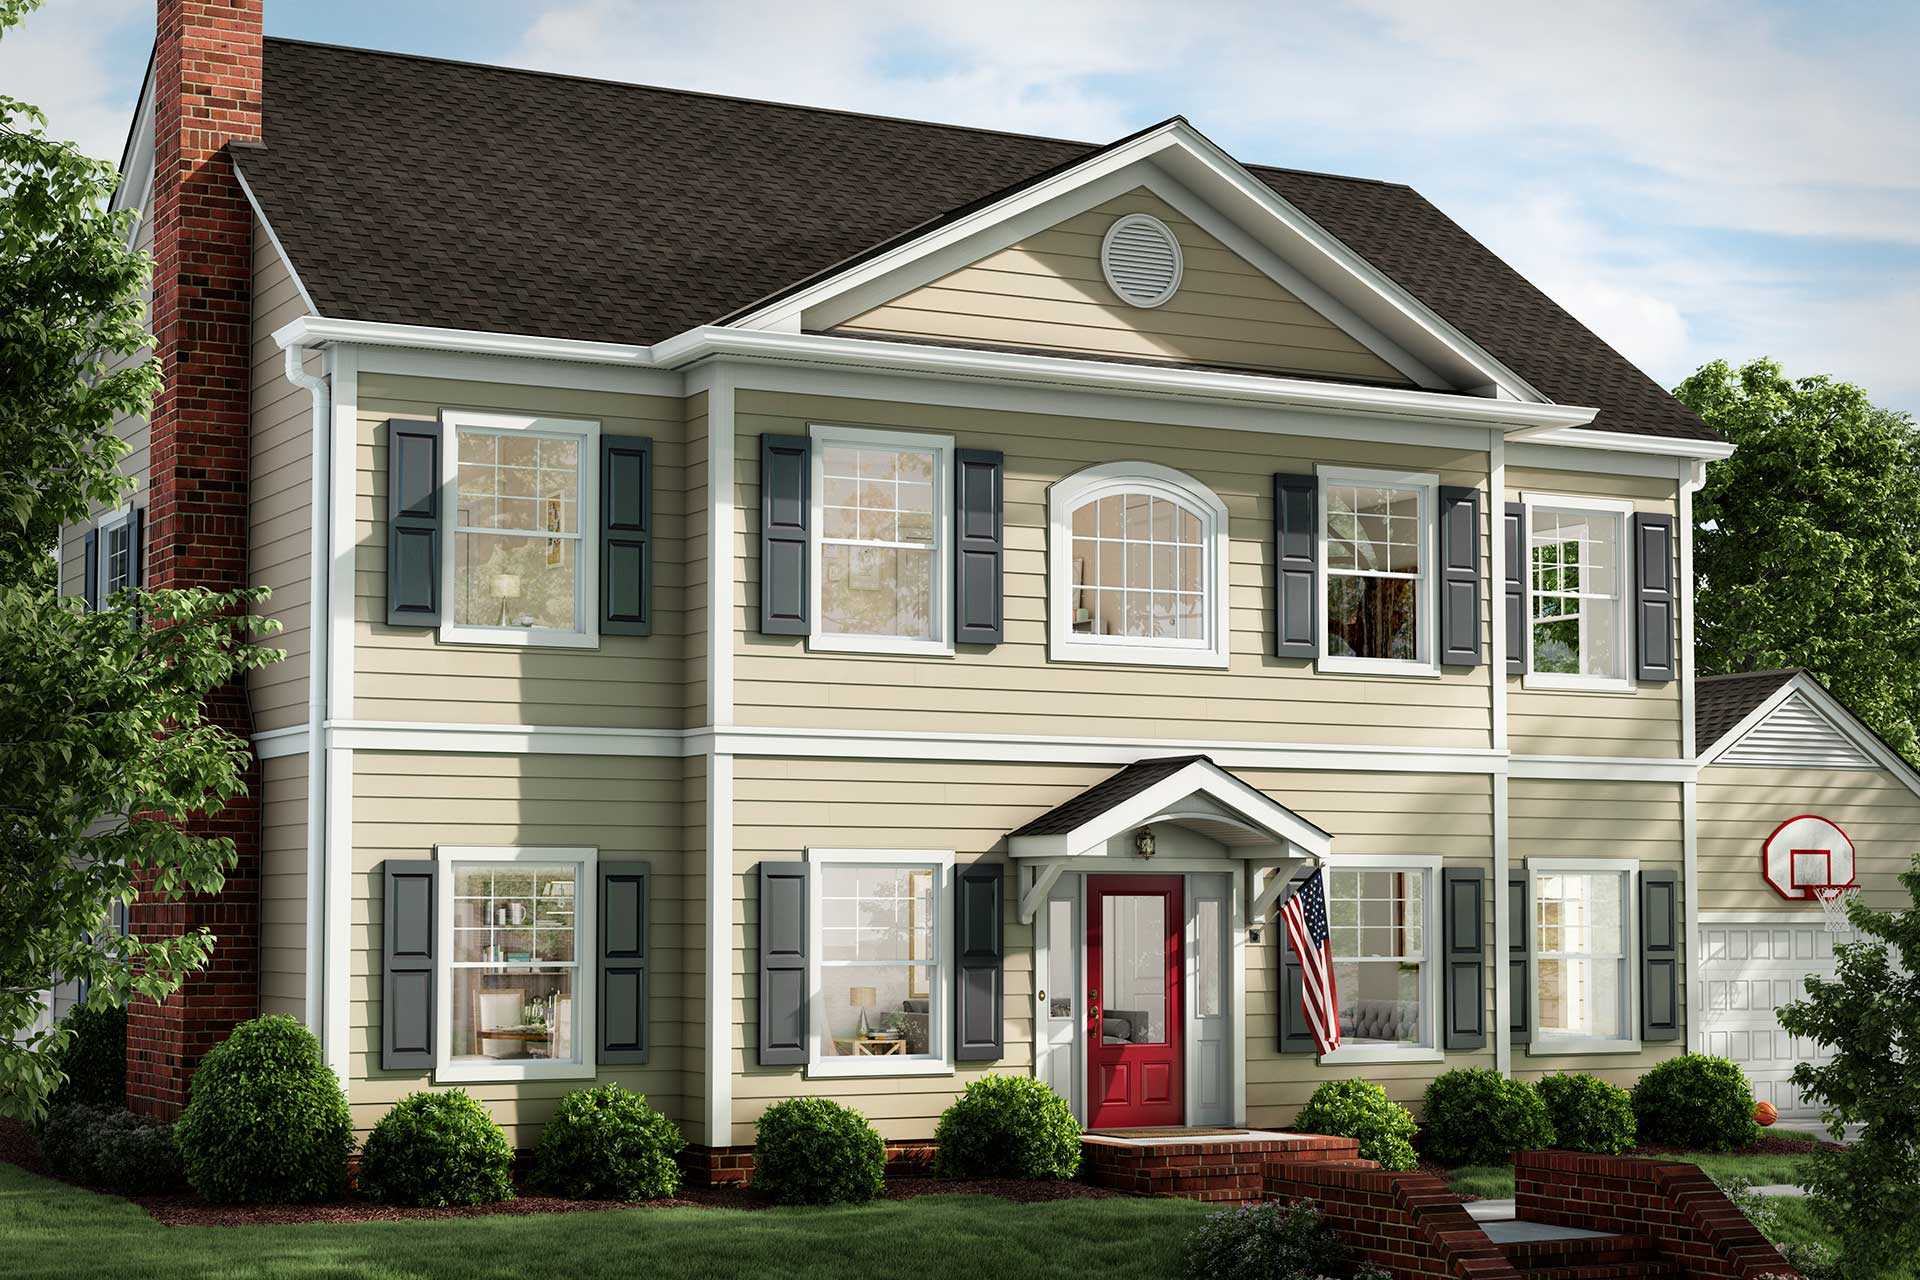 Home Exterior With Red Front Door Window World